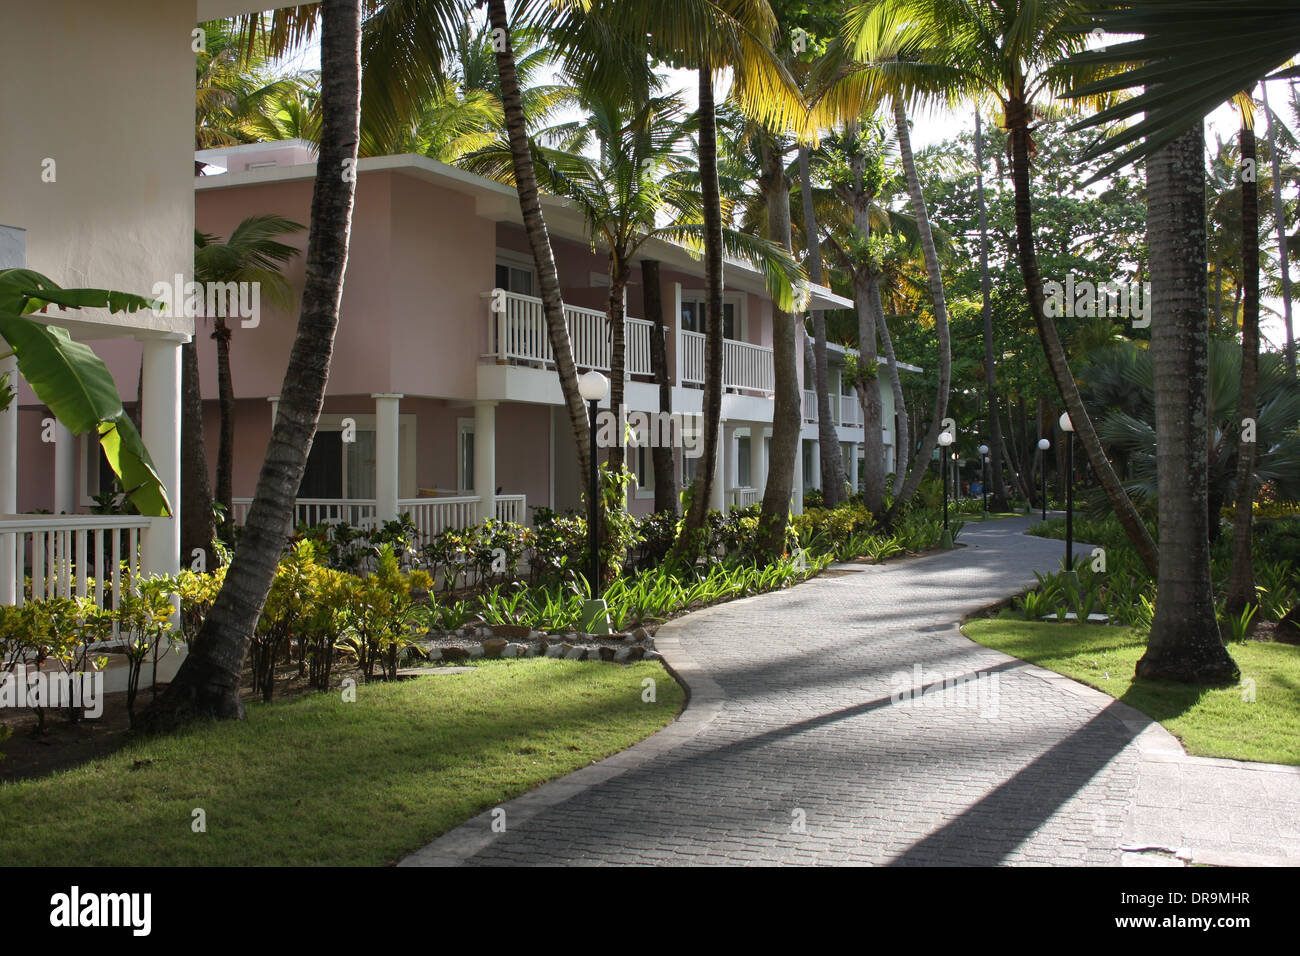 Holiday villas in the Dominican Republic Stock Photo